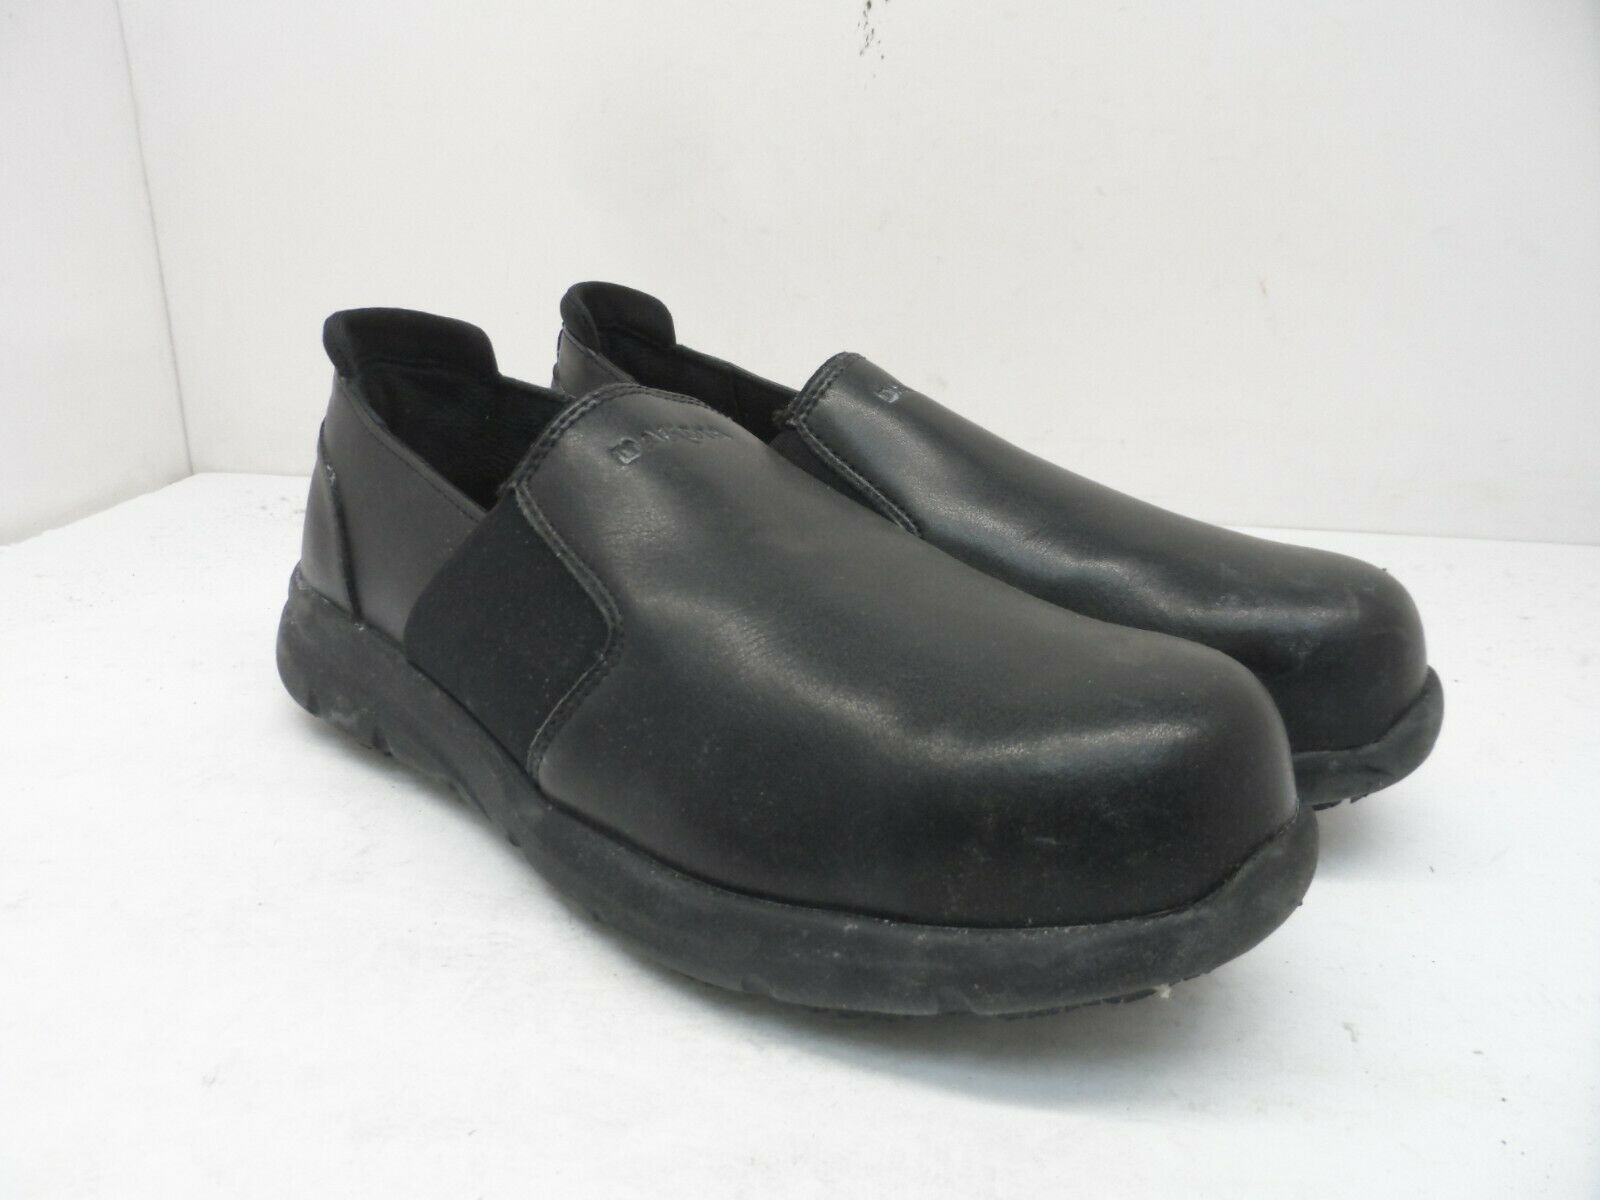 Primary image for DAKOTA Women's Oxford Slip-On Steel Toe Safety Work Shoes 3107 Black Size 8.5M